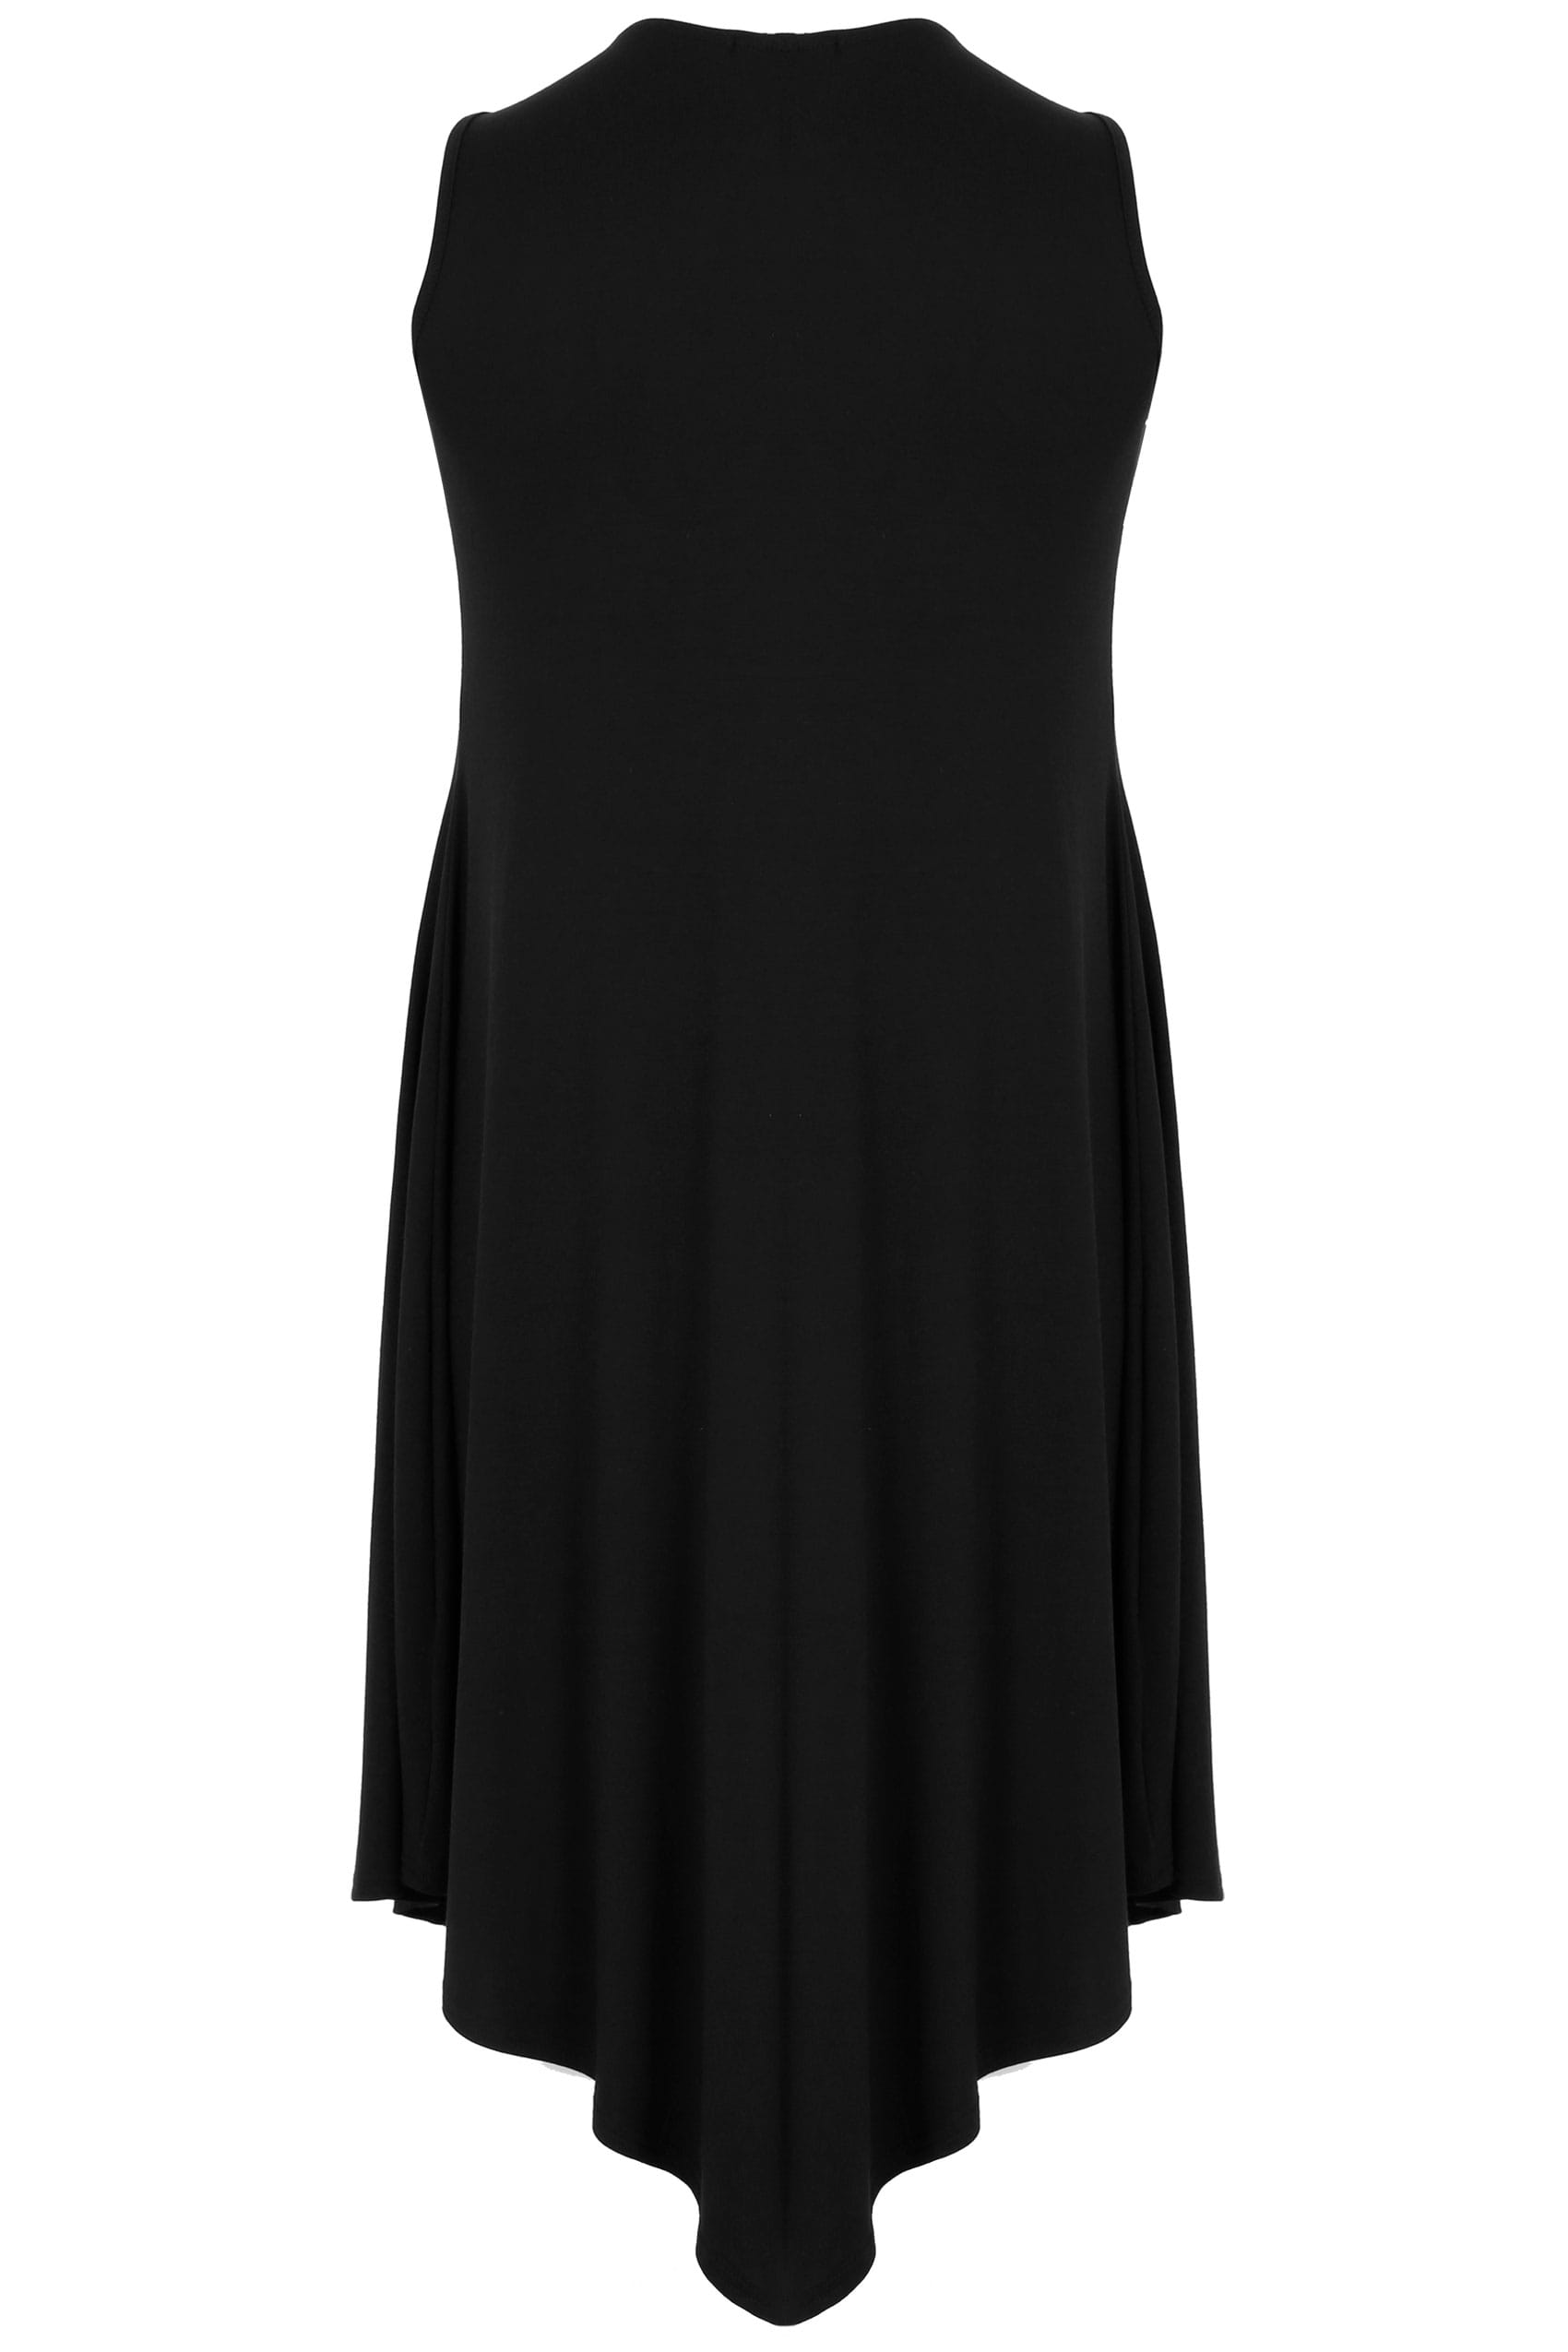 Black Jersey Swing Tunic Dress, Plus size 16 to 32